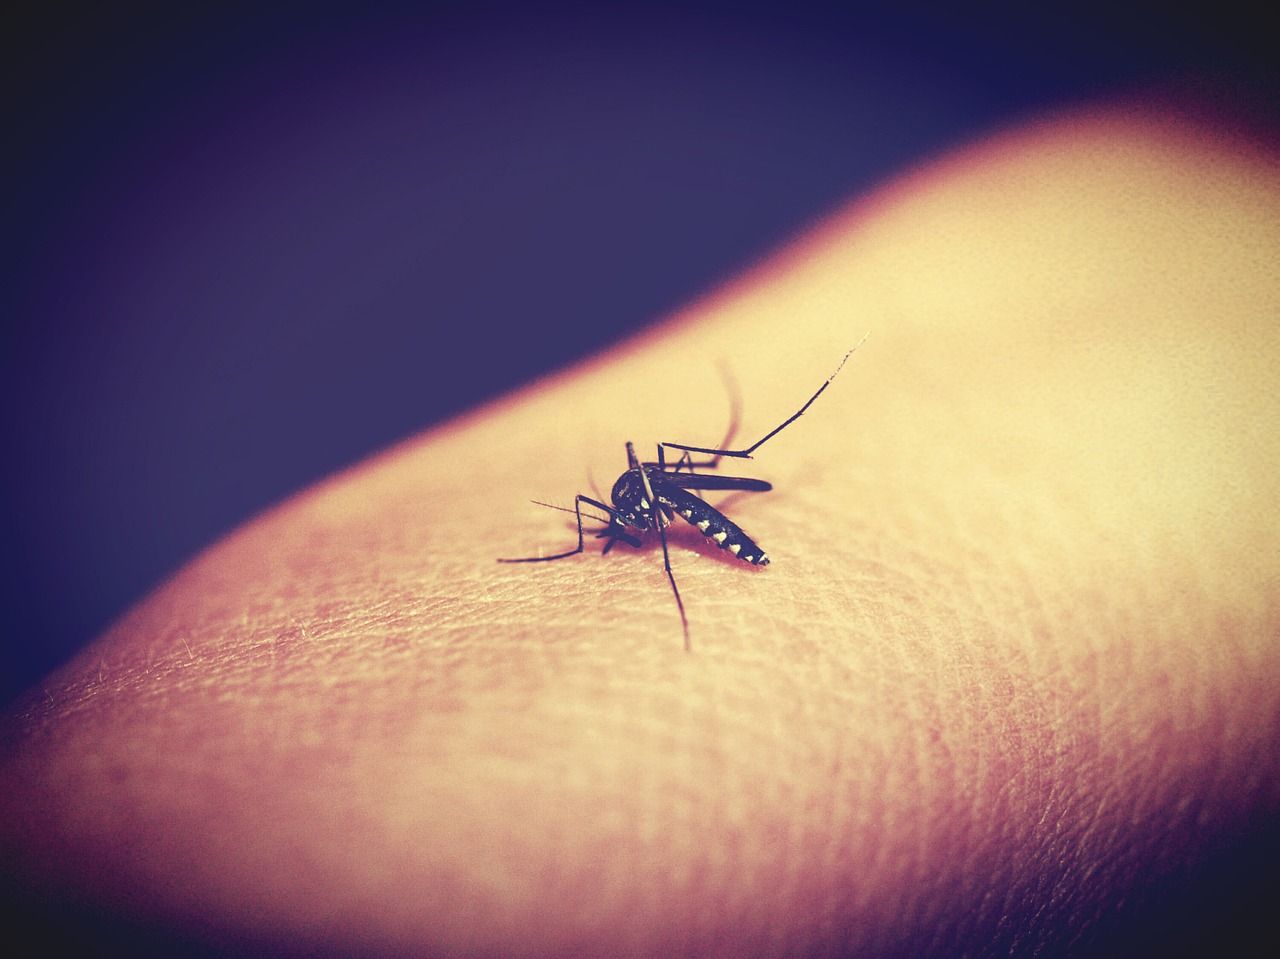 Malaria autoctona